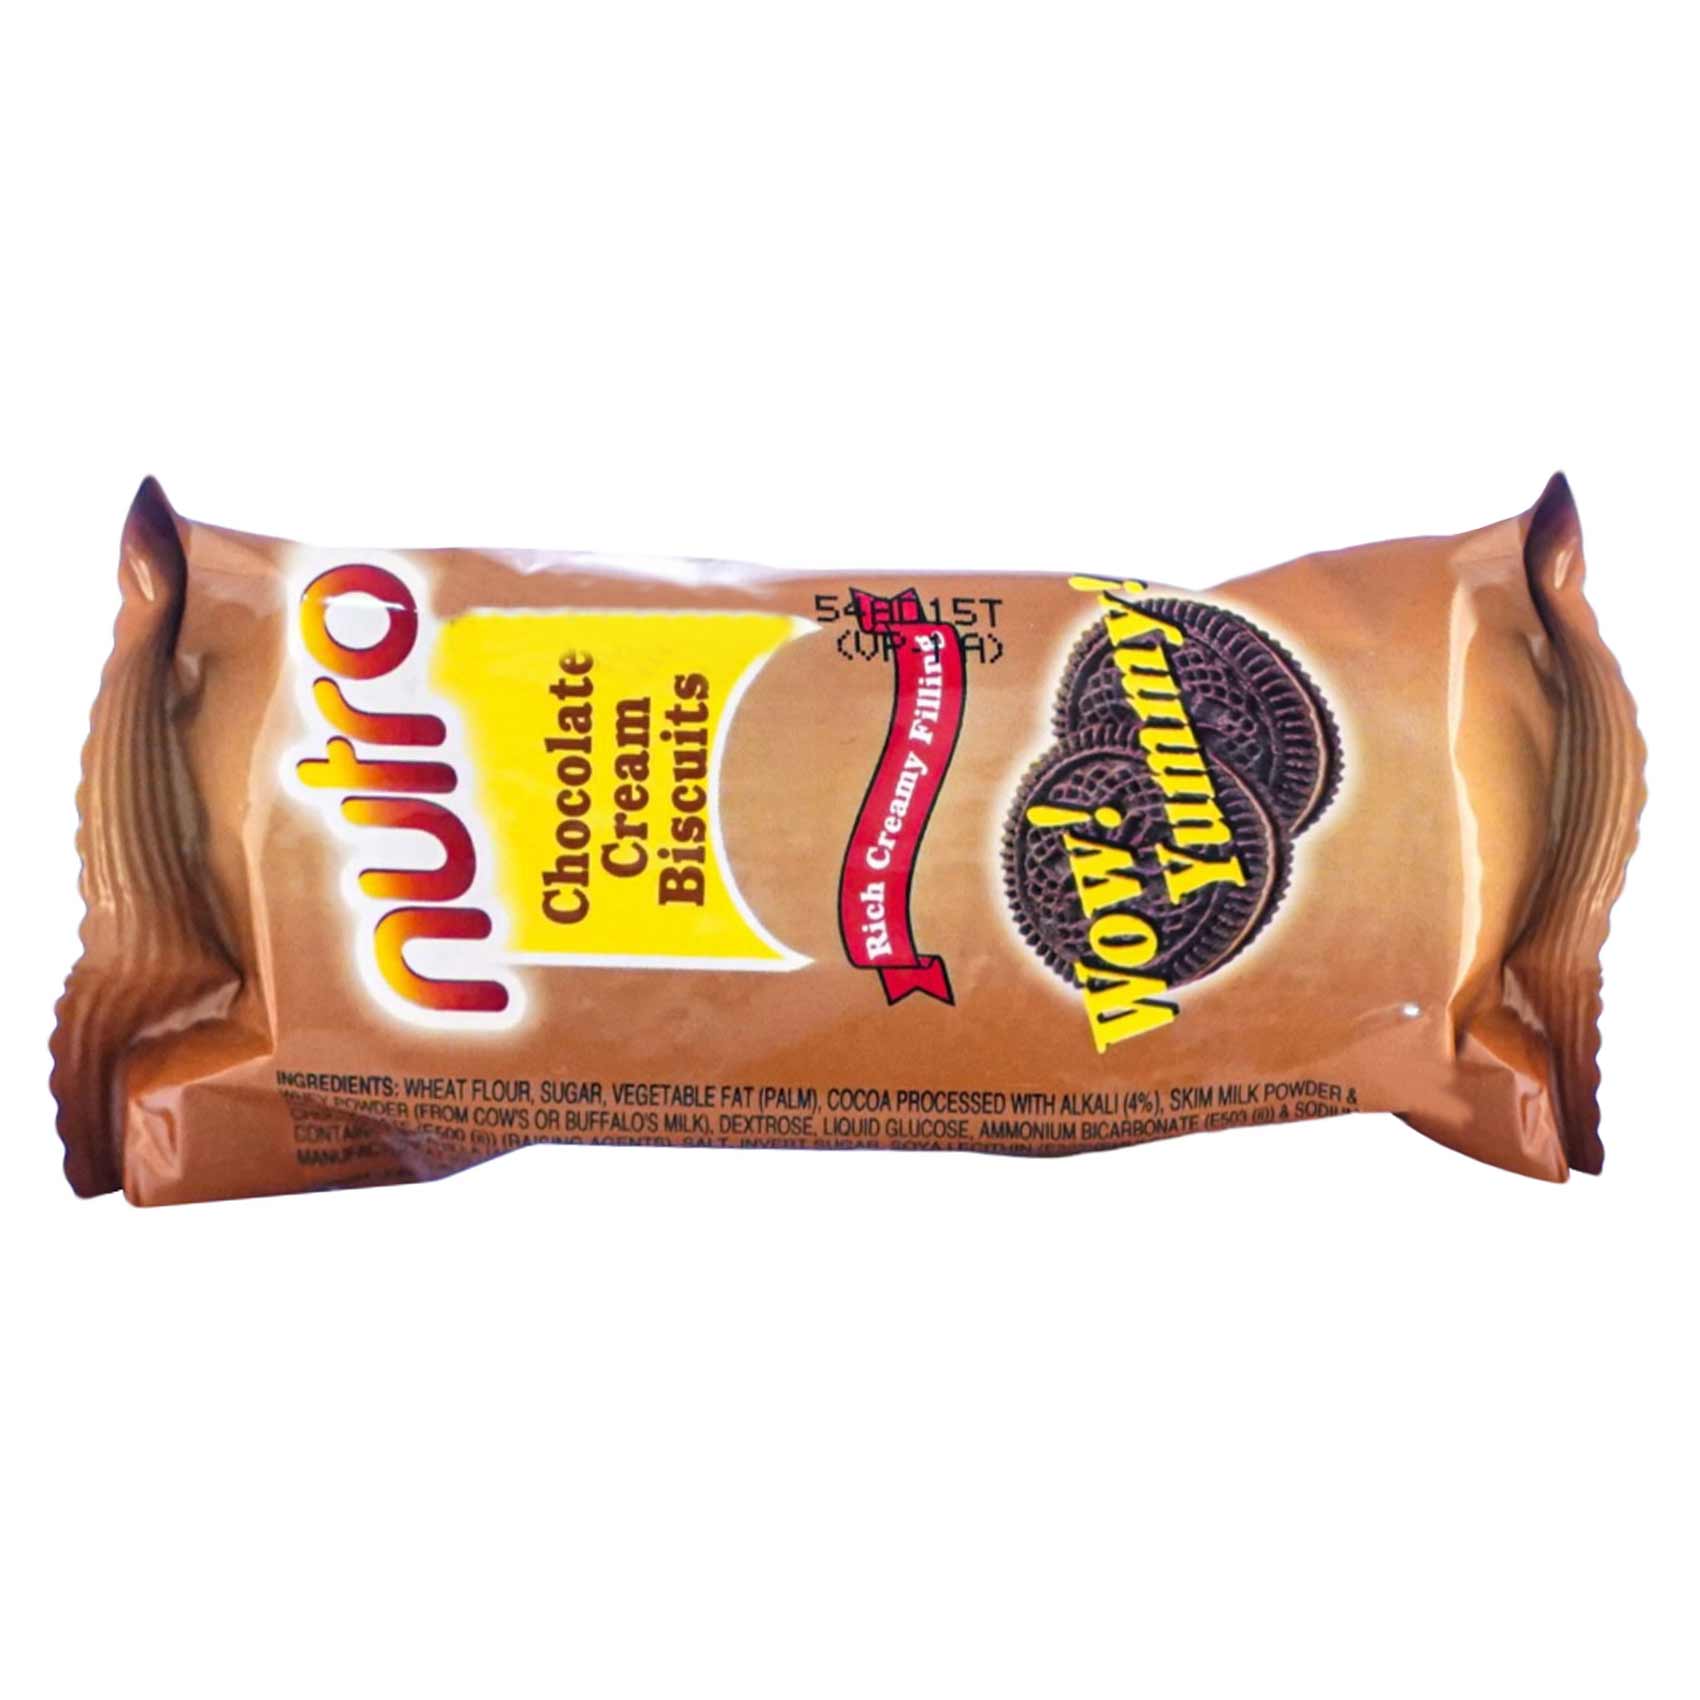 Nutro Mini Chocolate Cream Biscuits 27g